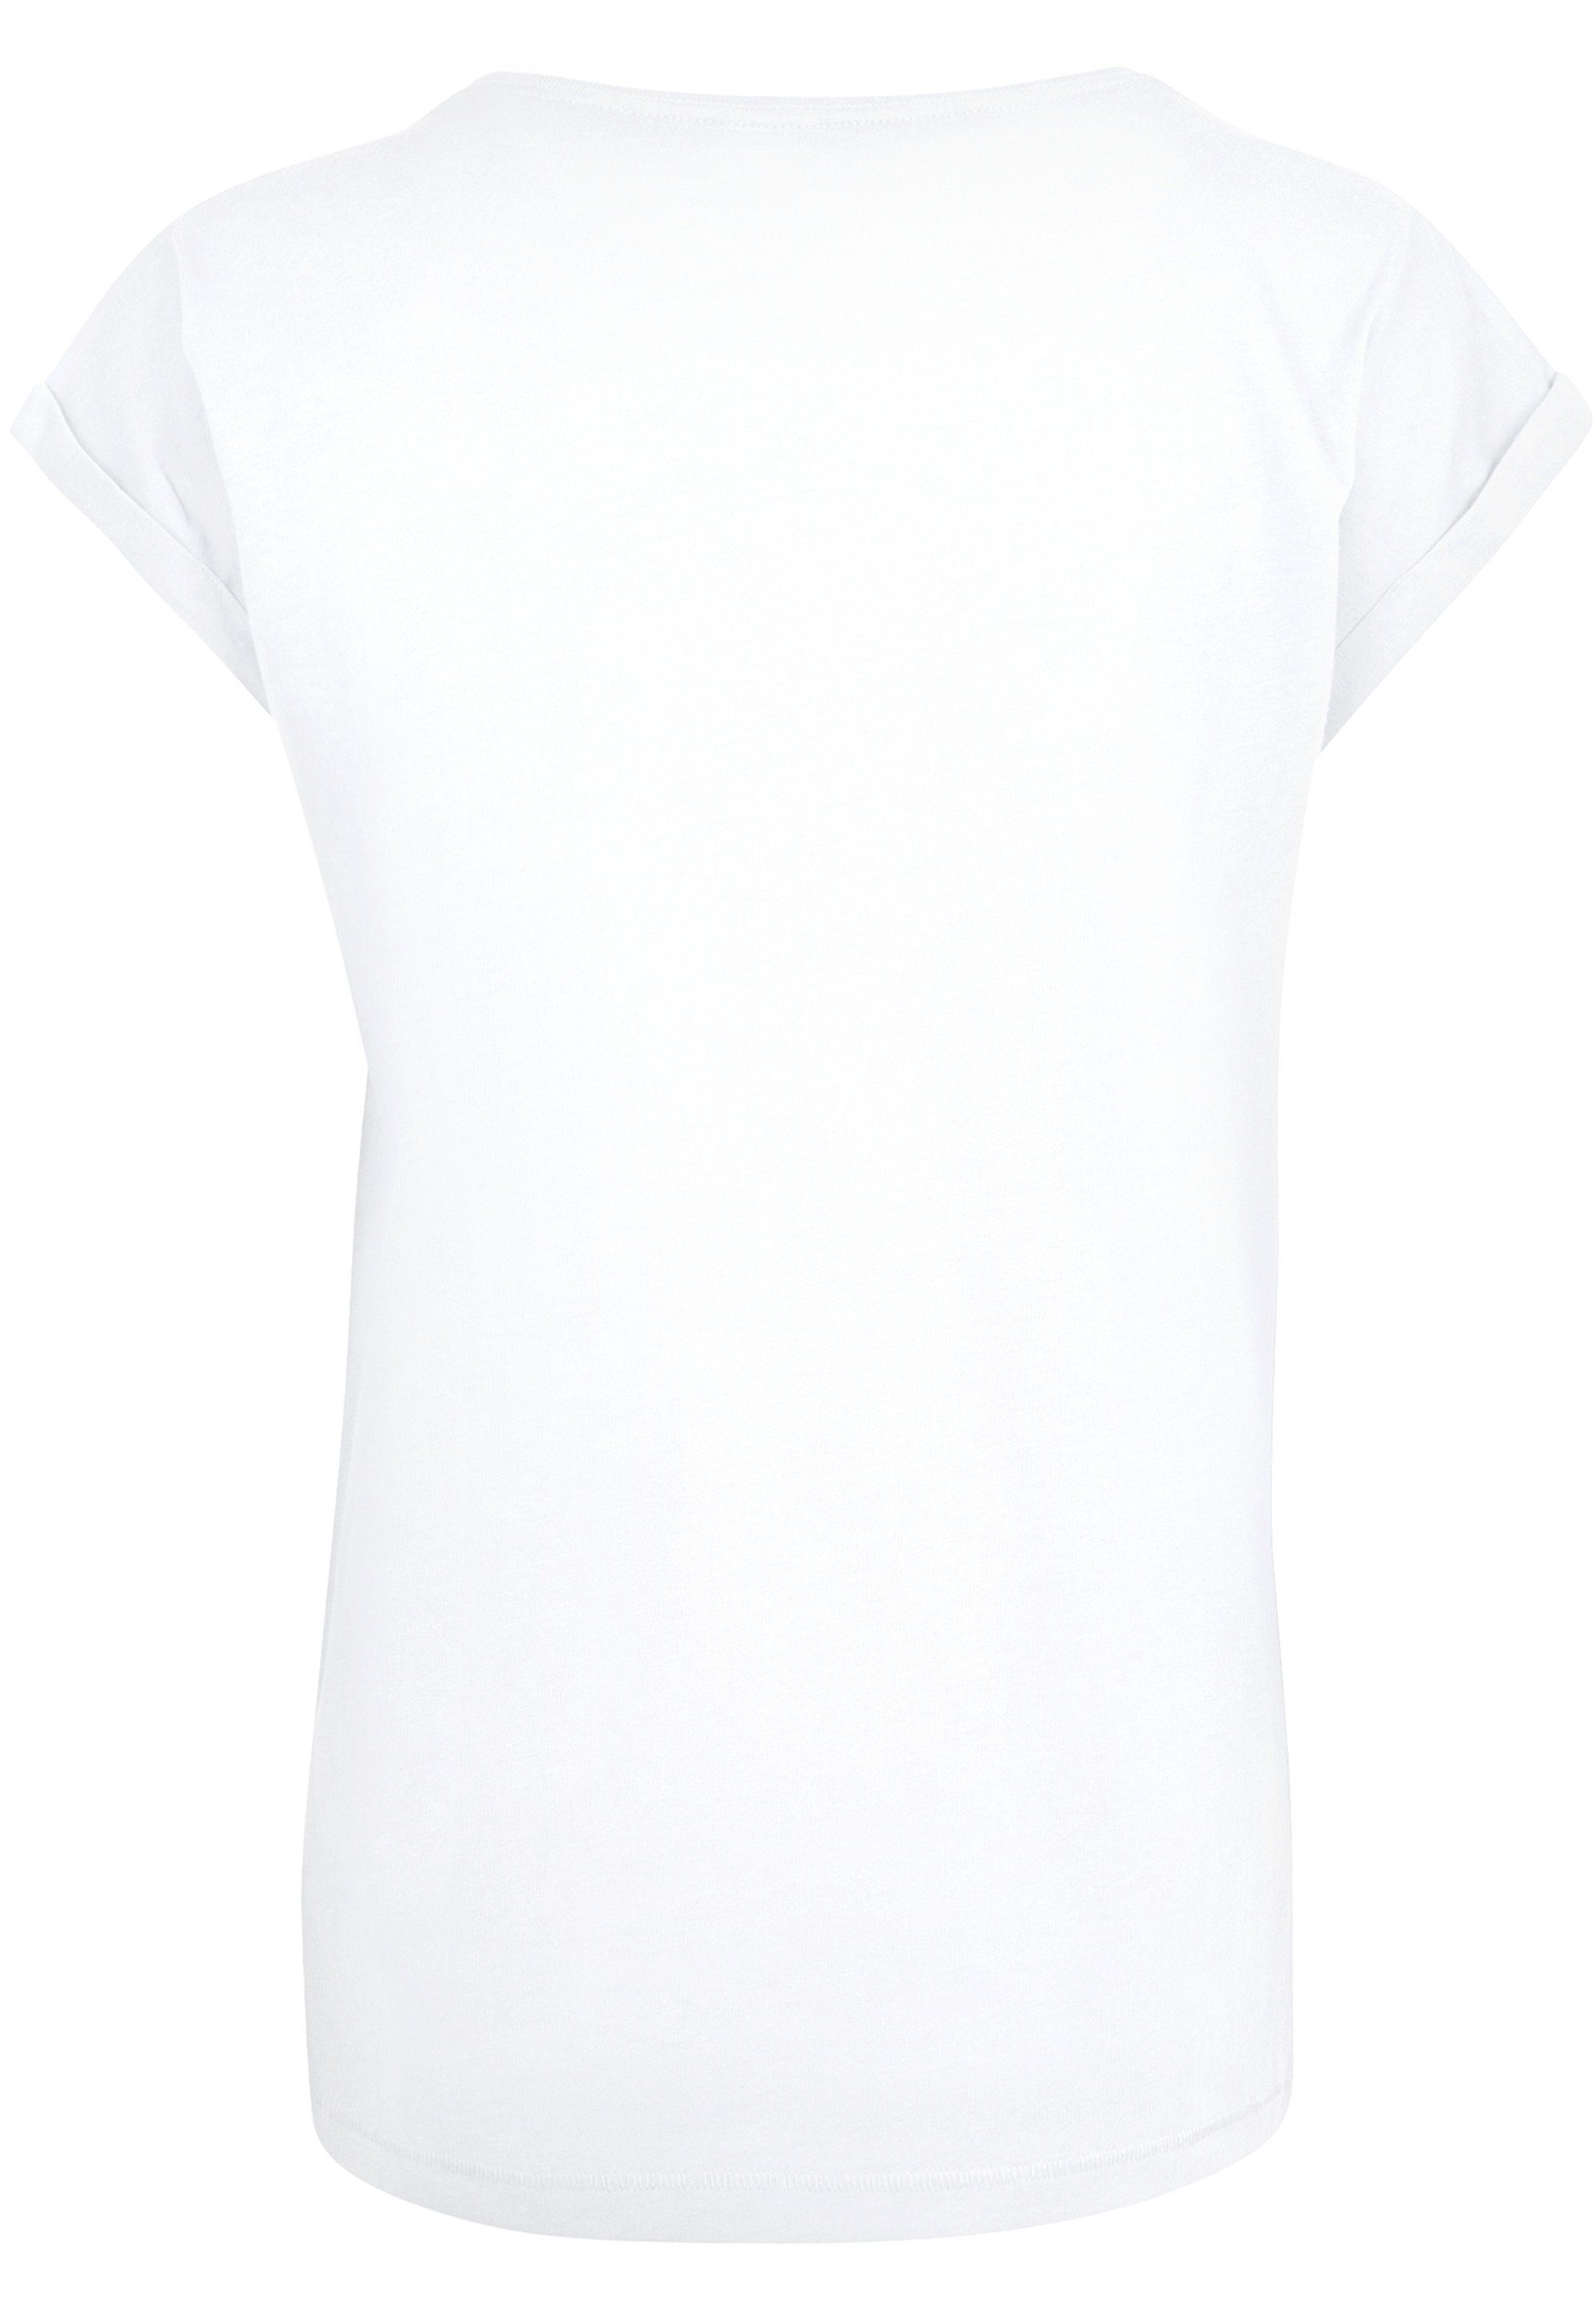 F4NT4STIC T-Shirt Rubber Duck Captain Short Sleeve Print